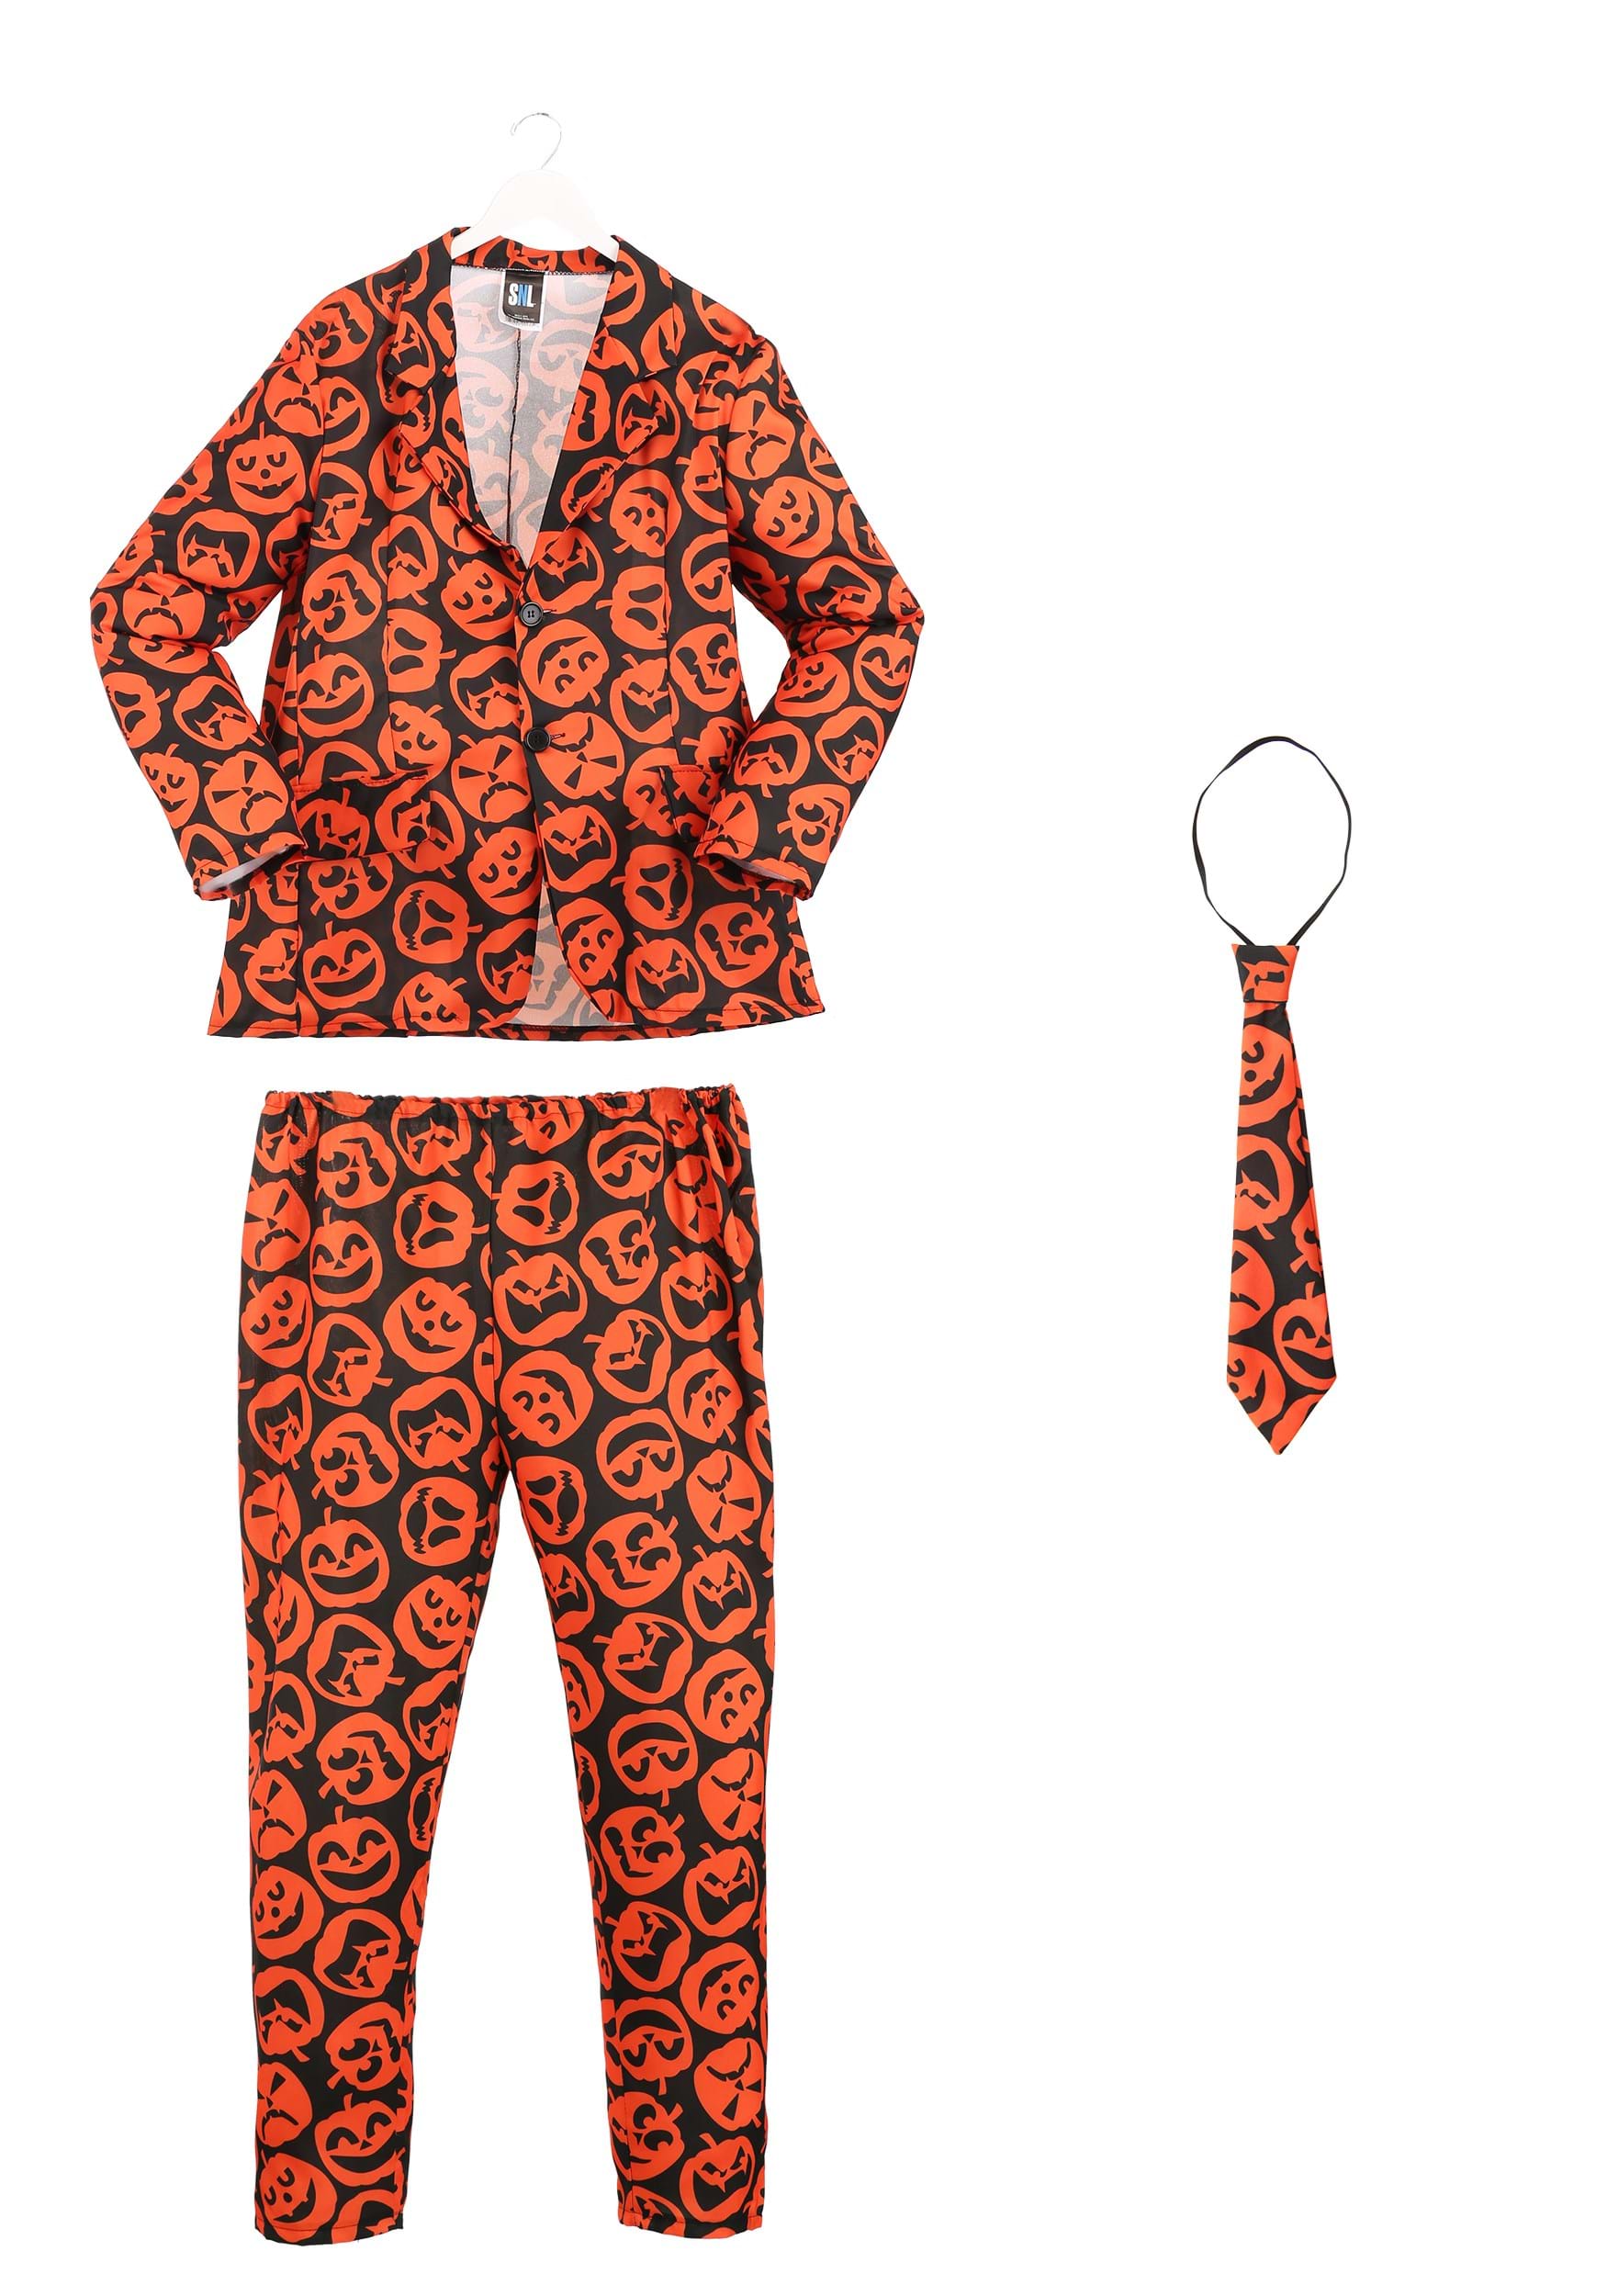 David S. Pumpkins Costume For Men